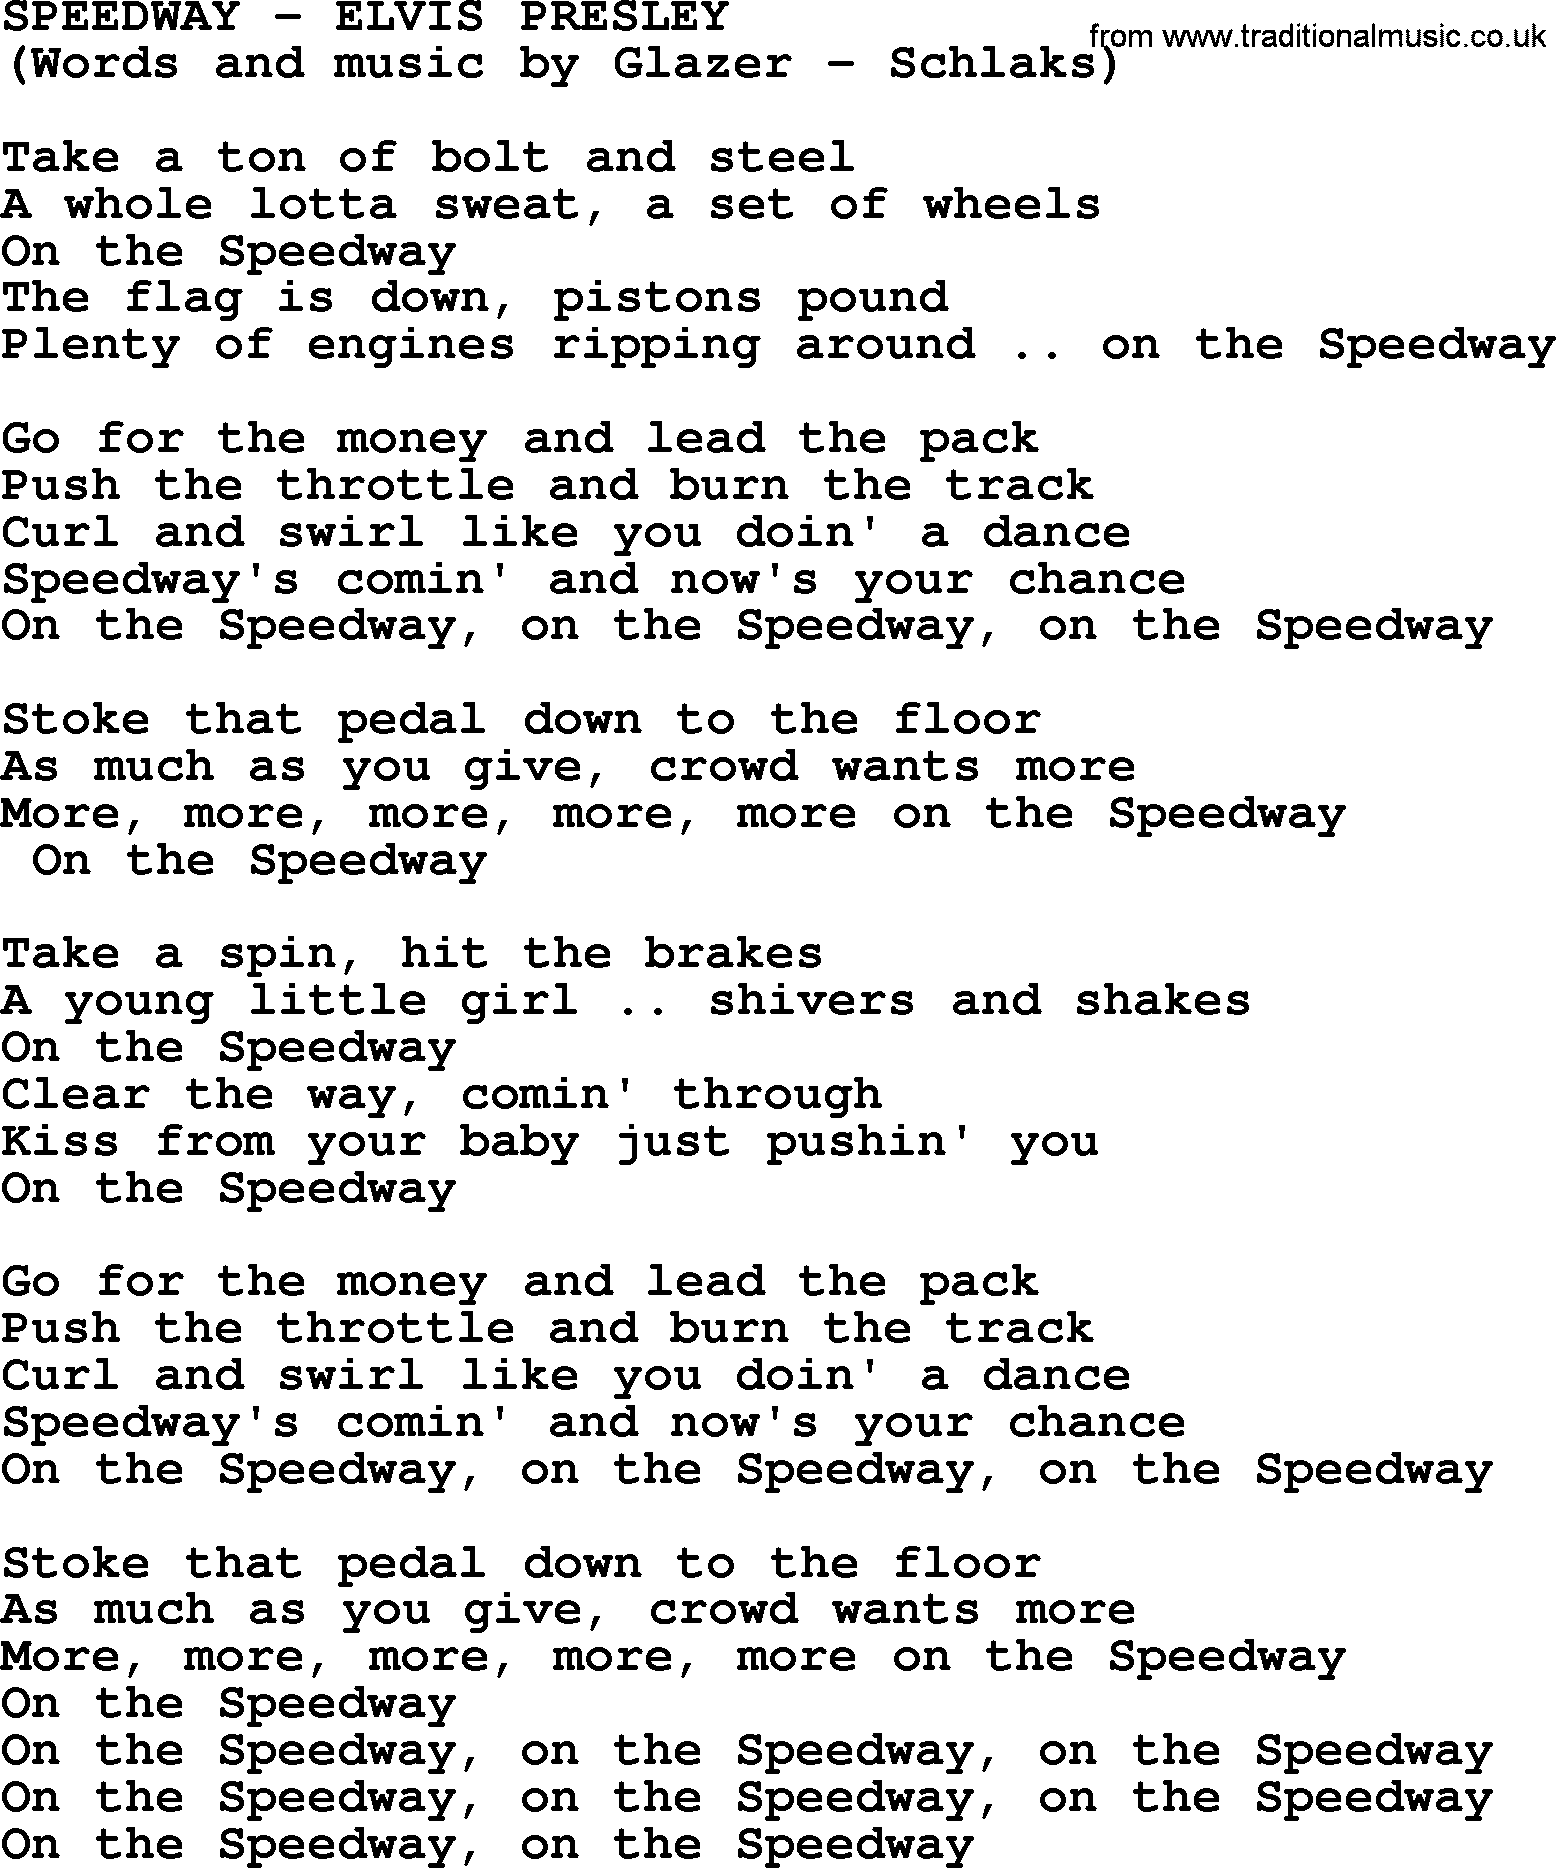 Elvis Presley song: Speedway lyrics